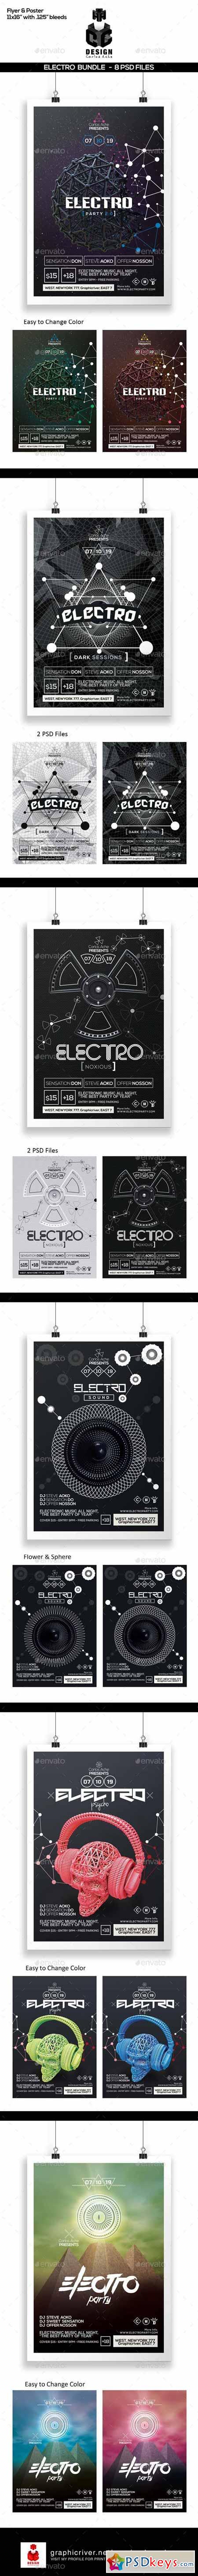 Electro Bundle Poster & Flyer Templates 12378828